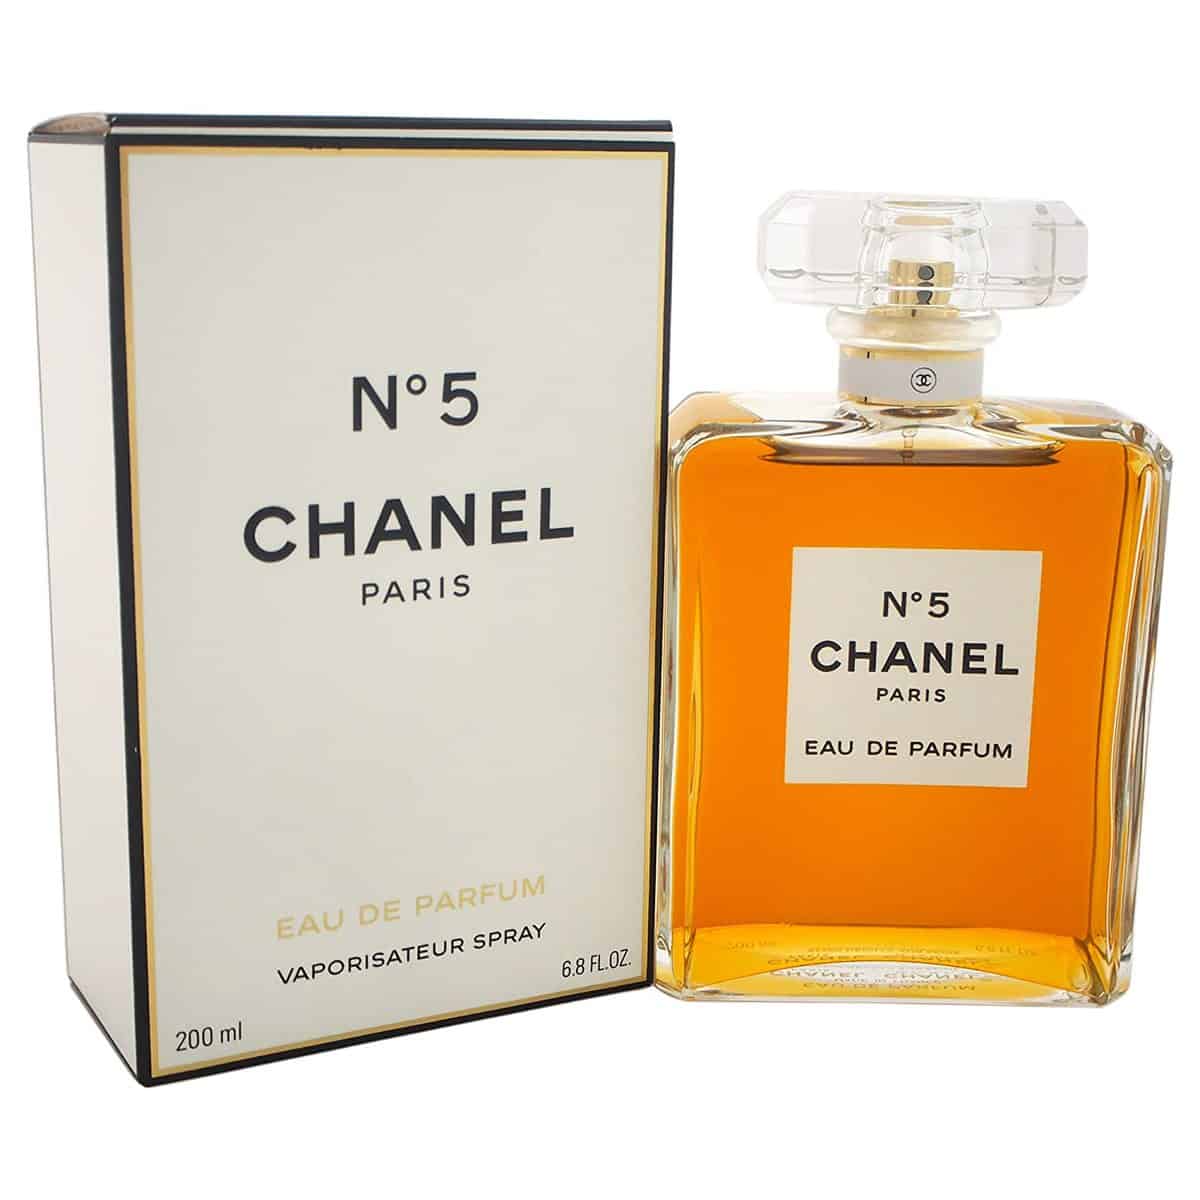 Chanel N°5 Eau de Parfum (Damen) - 200 ml - für 110,80 € inkl